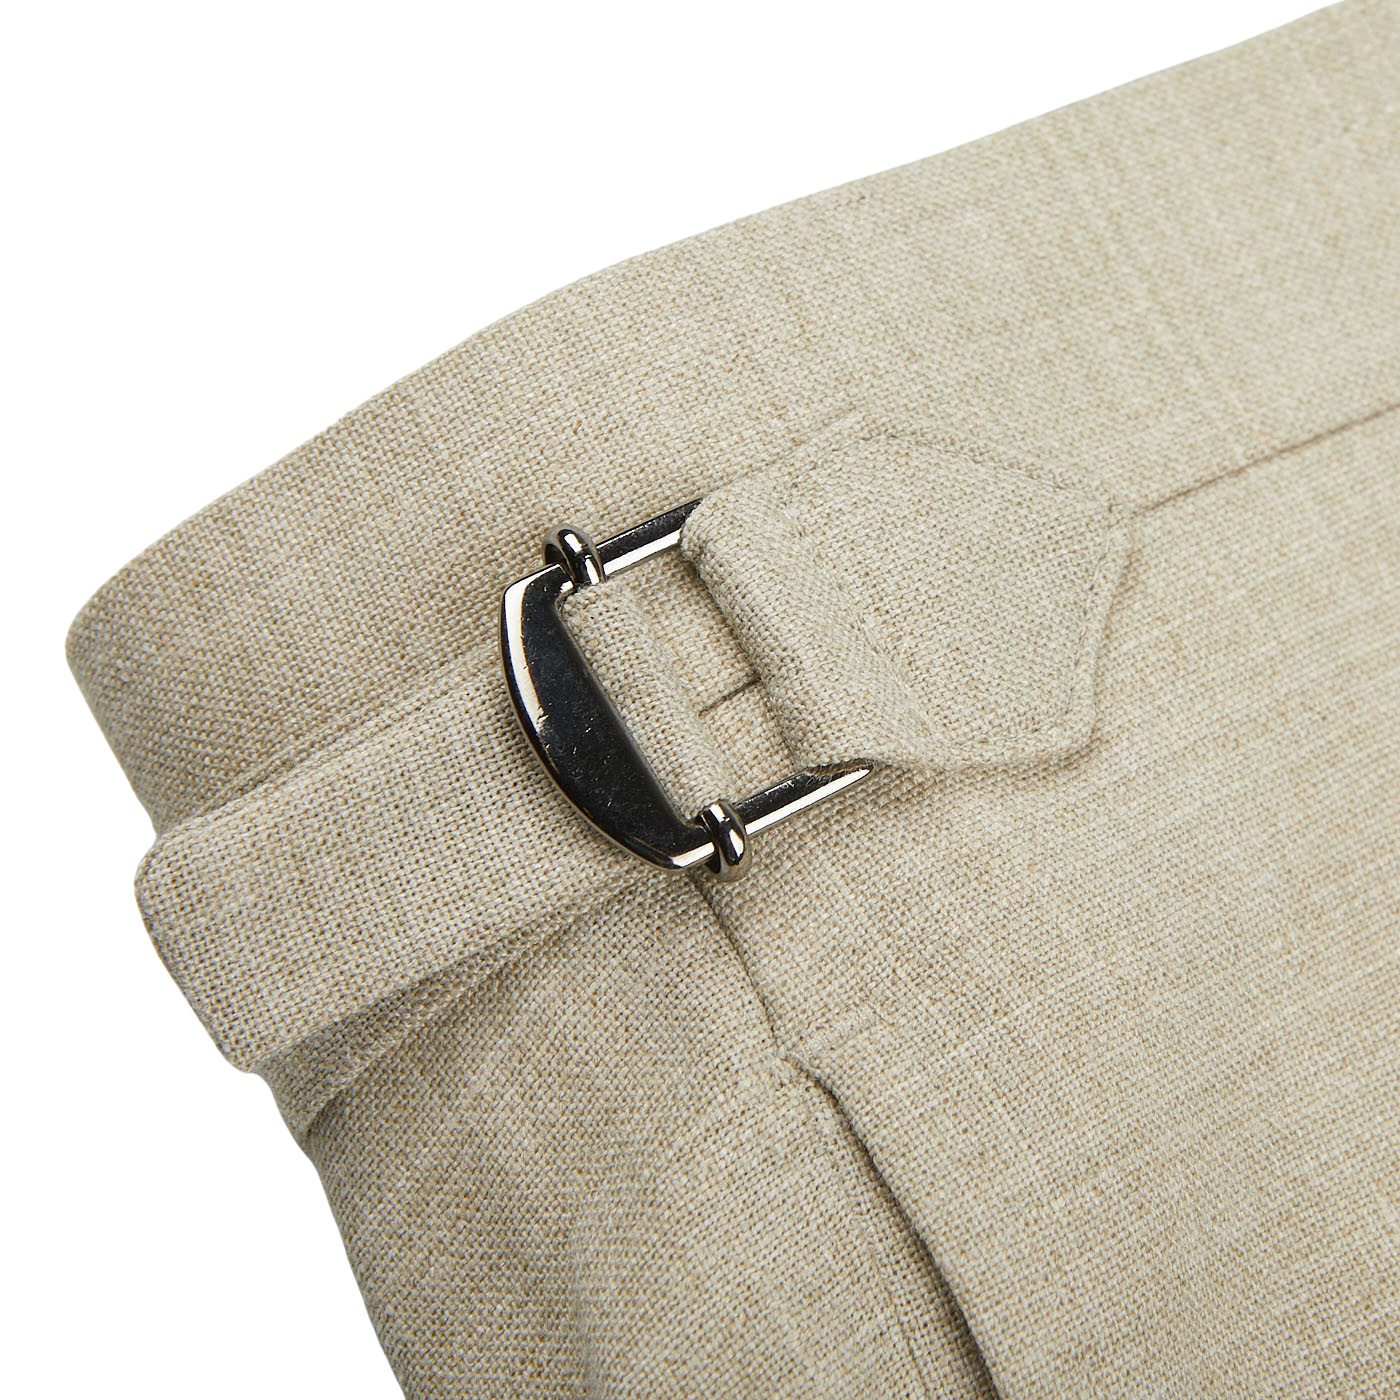 A close up of a Baltzar Sartorial Beige Melange Wool Linen Pleated Trousers belt buckle.